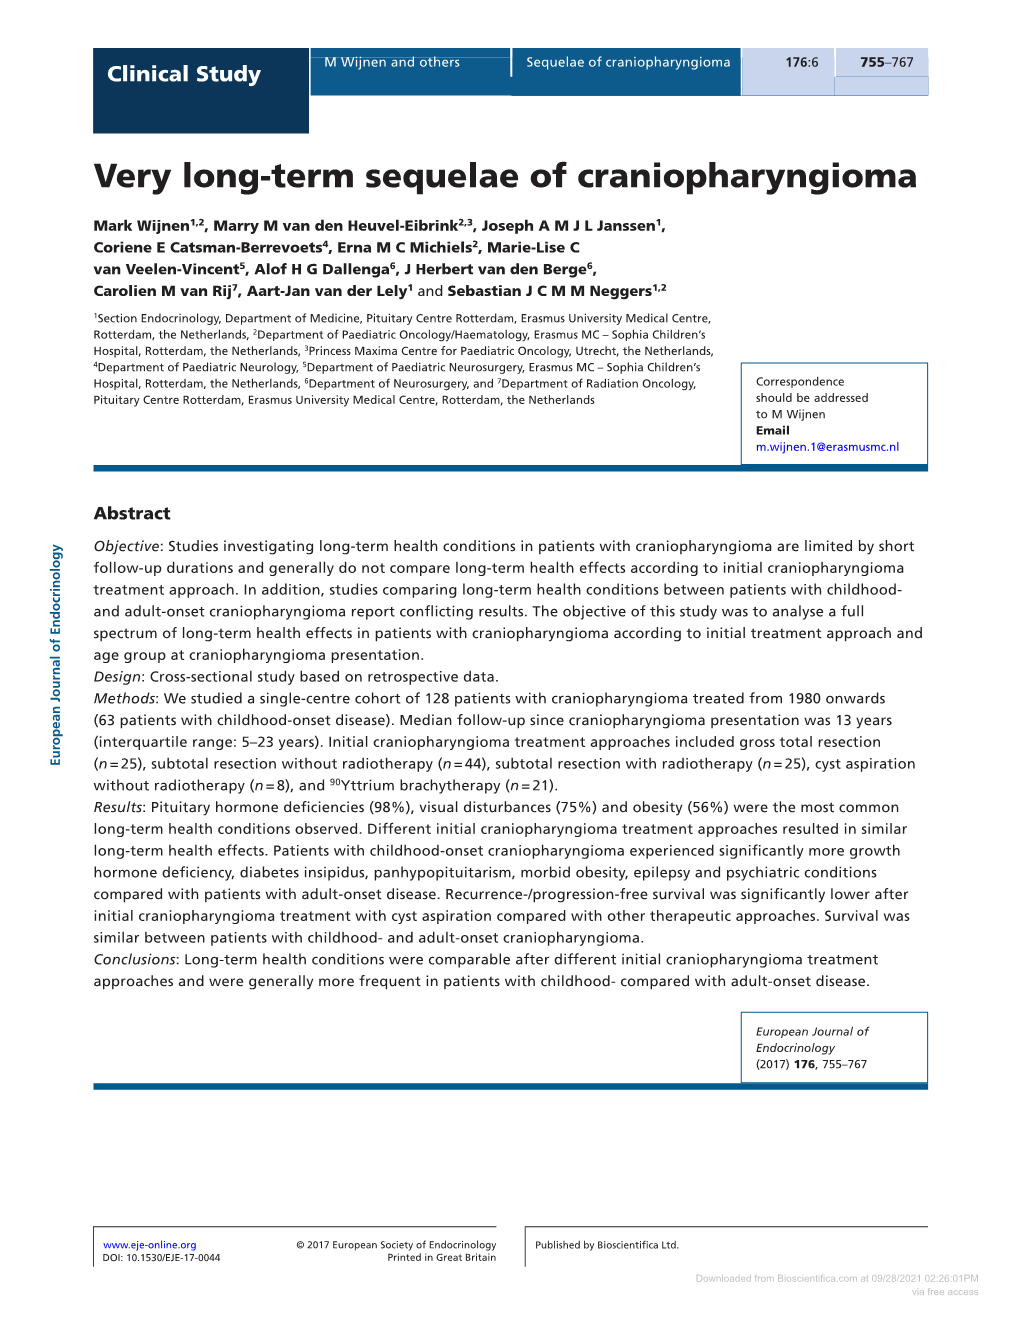 Very Long-Term Sequelae of Craniopharyngioma